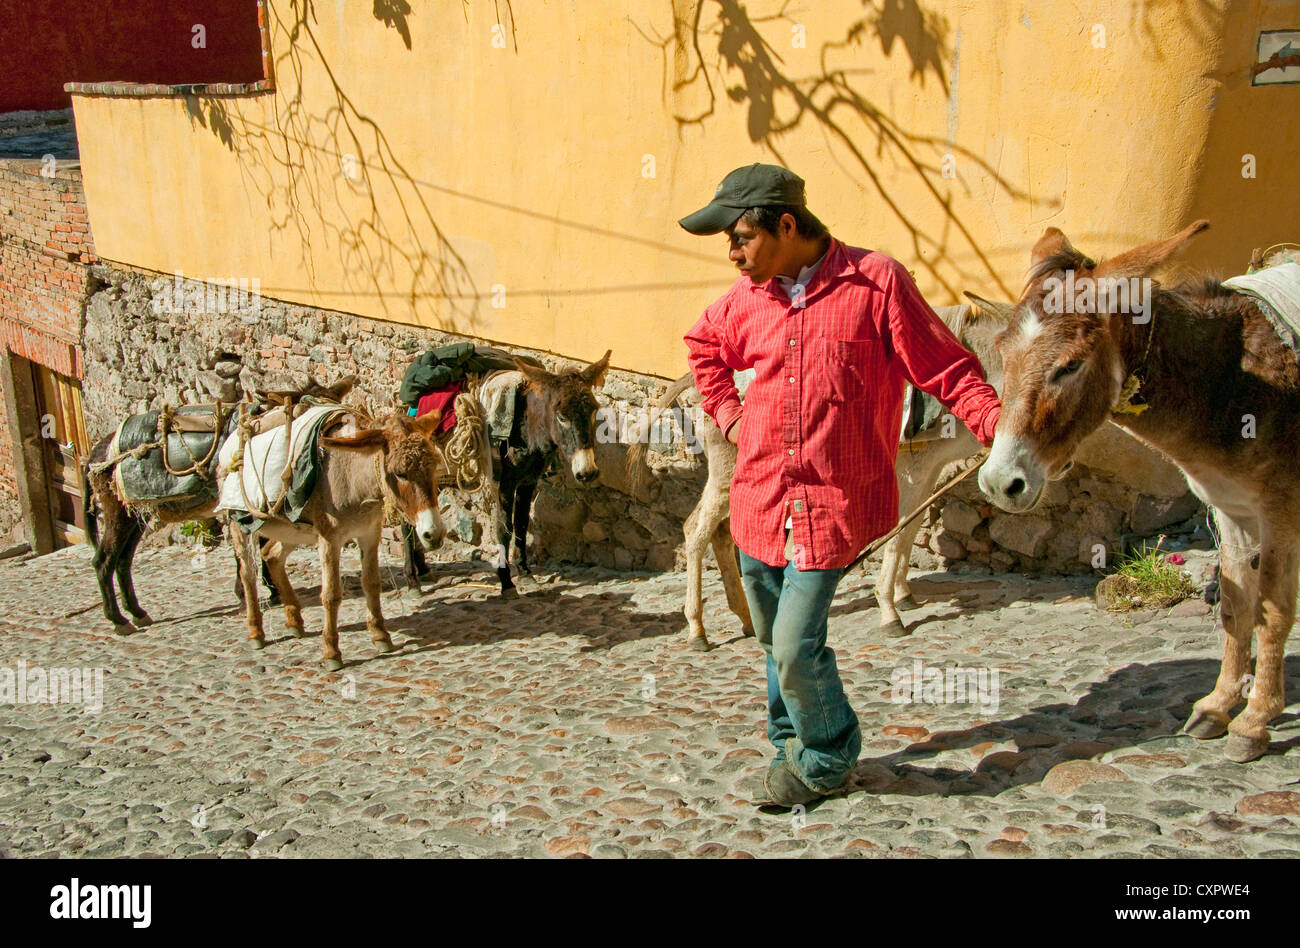 San Miguel de Allende burro wrangler on city street Stock Photo